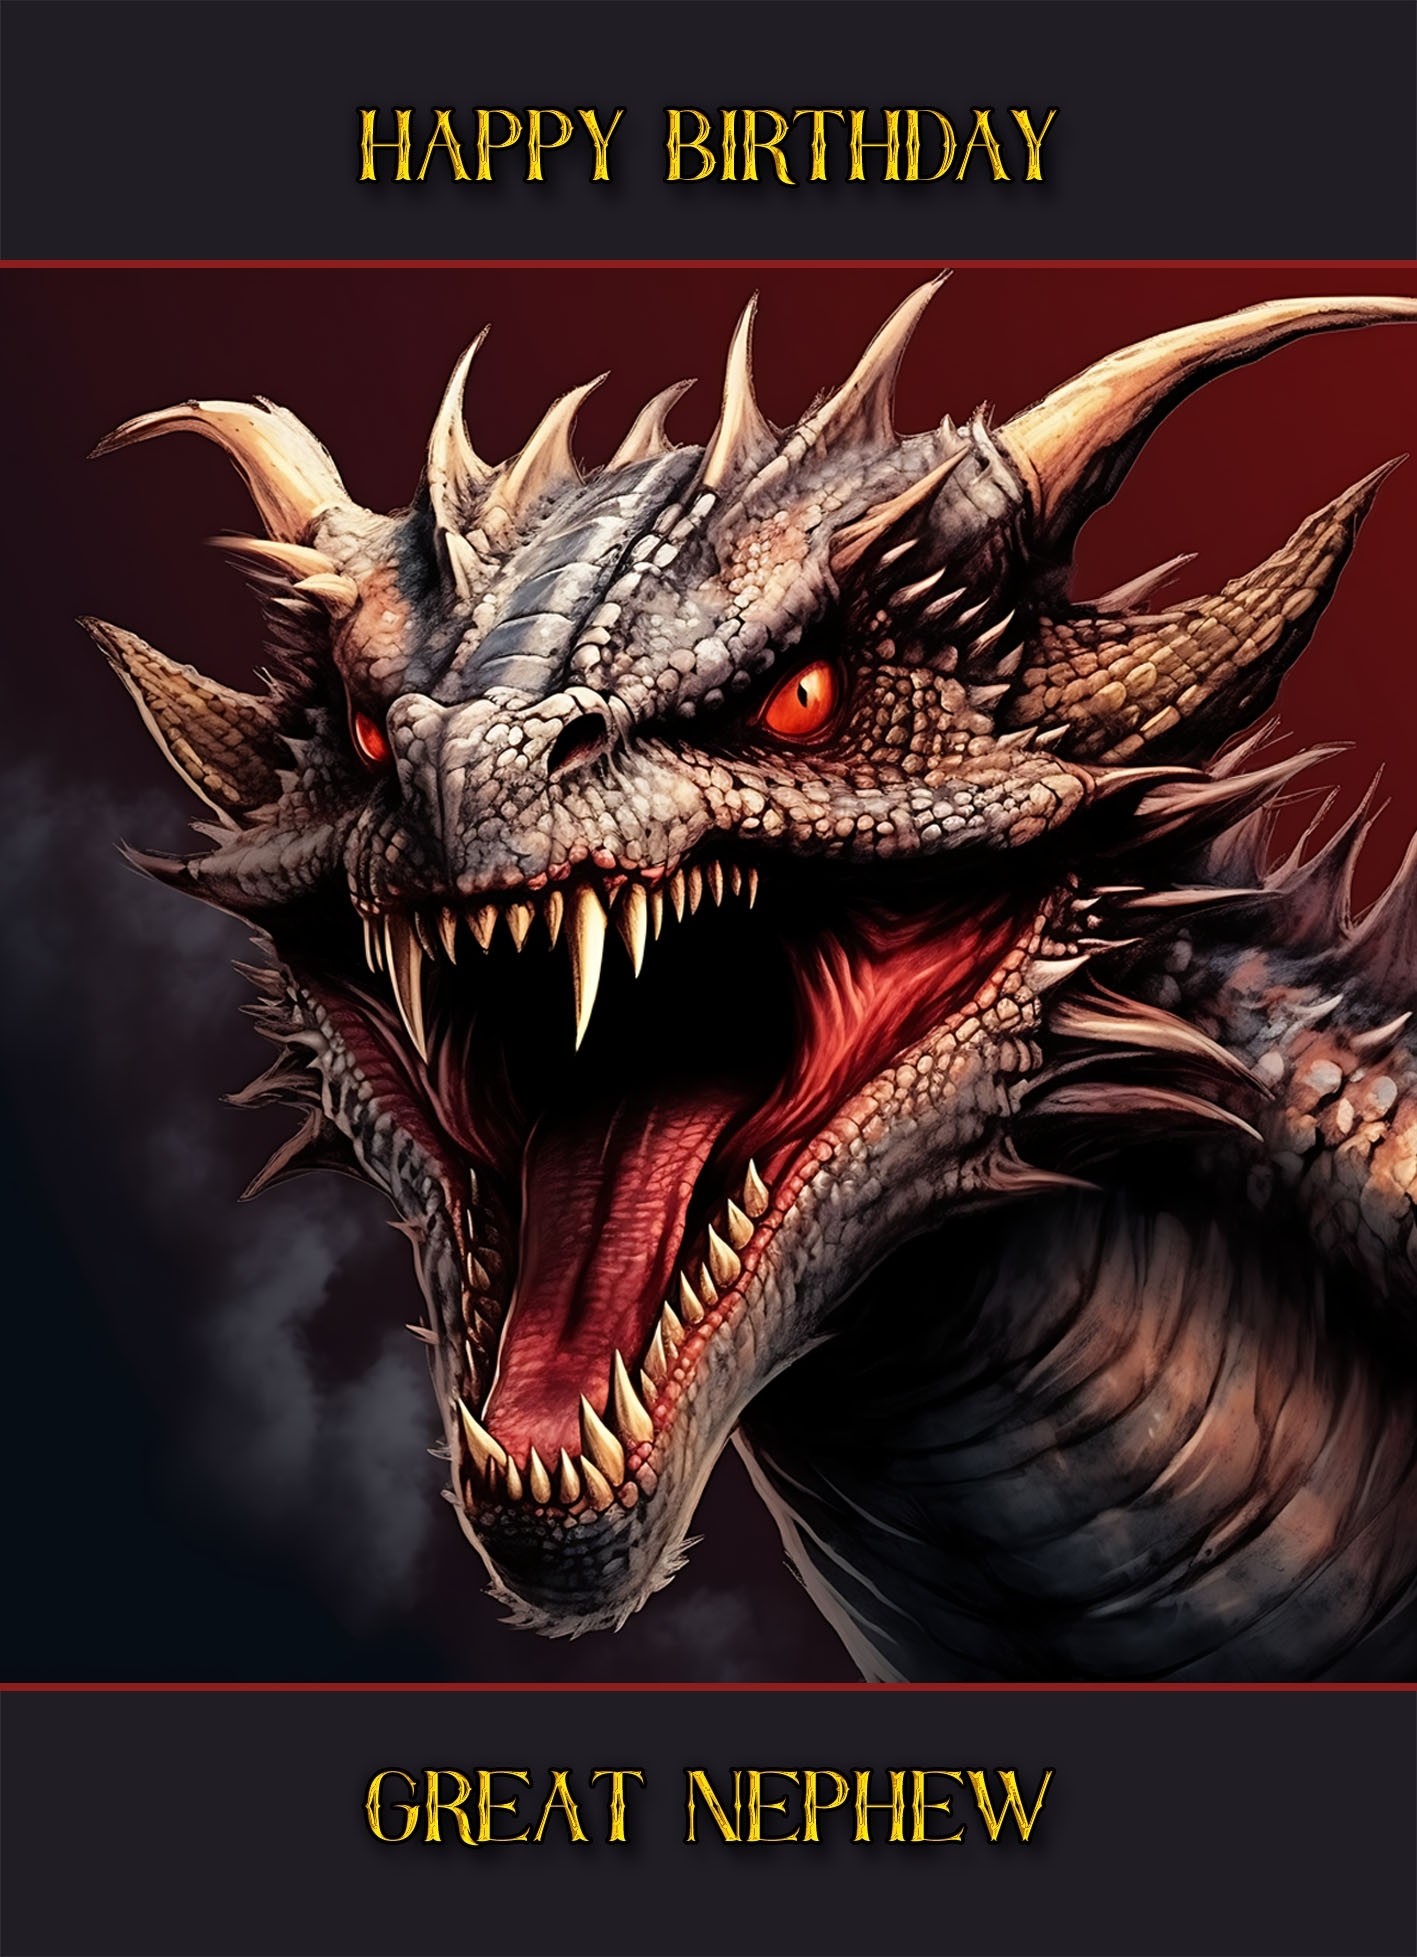 Gothic Fantasy Dragon Birthday Card For Great Nephew (Design 2)